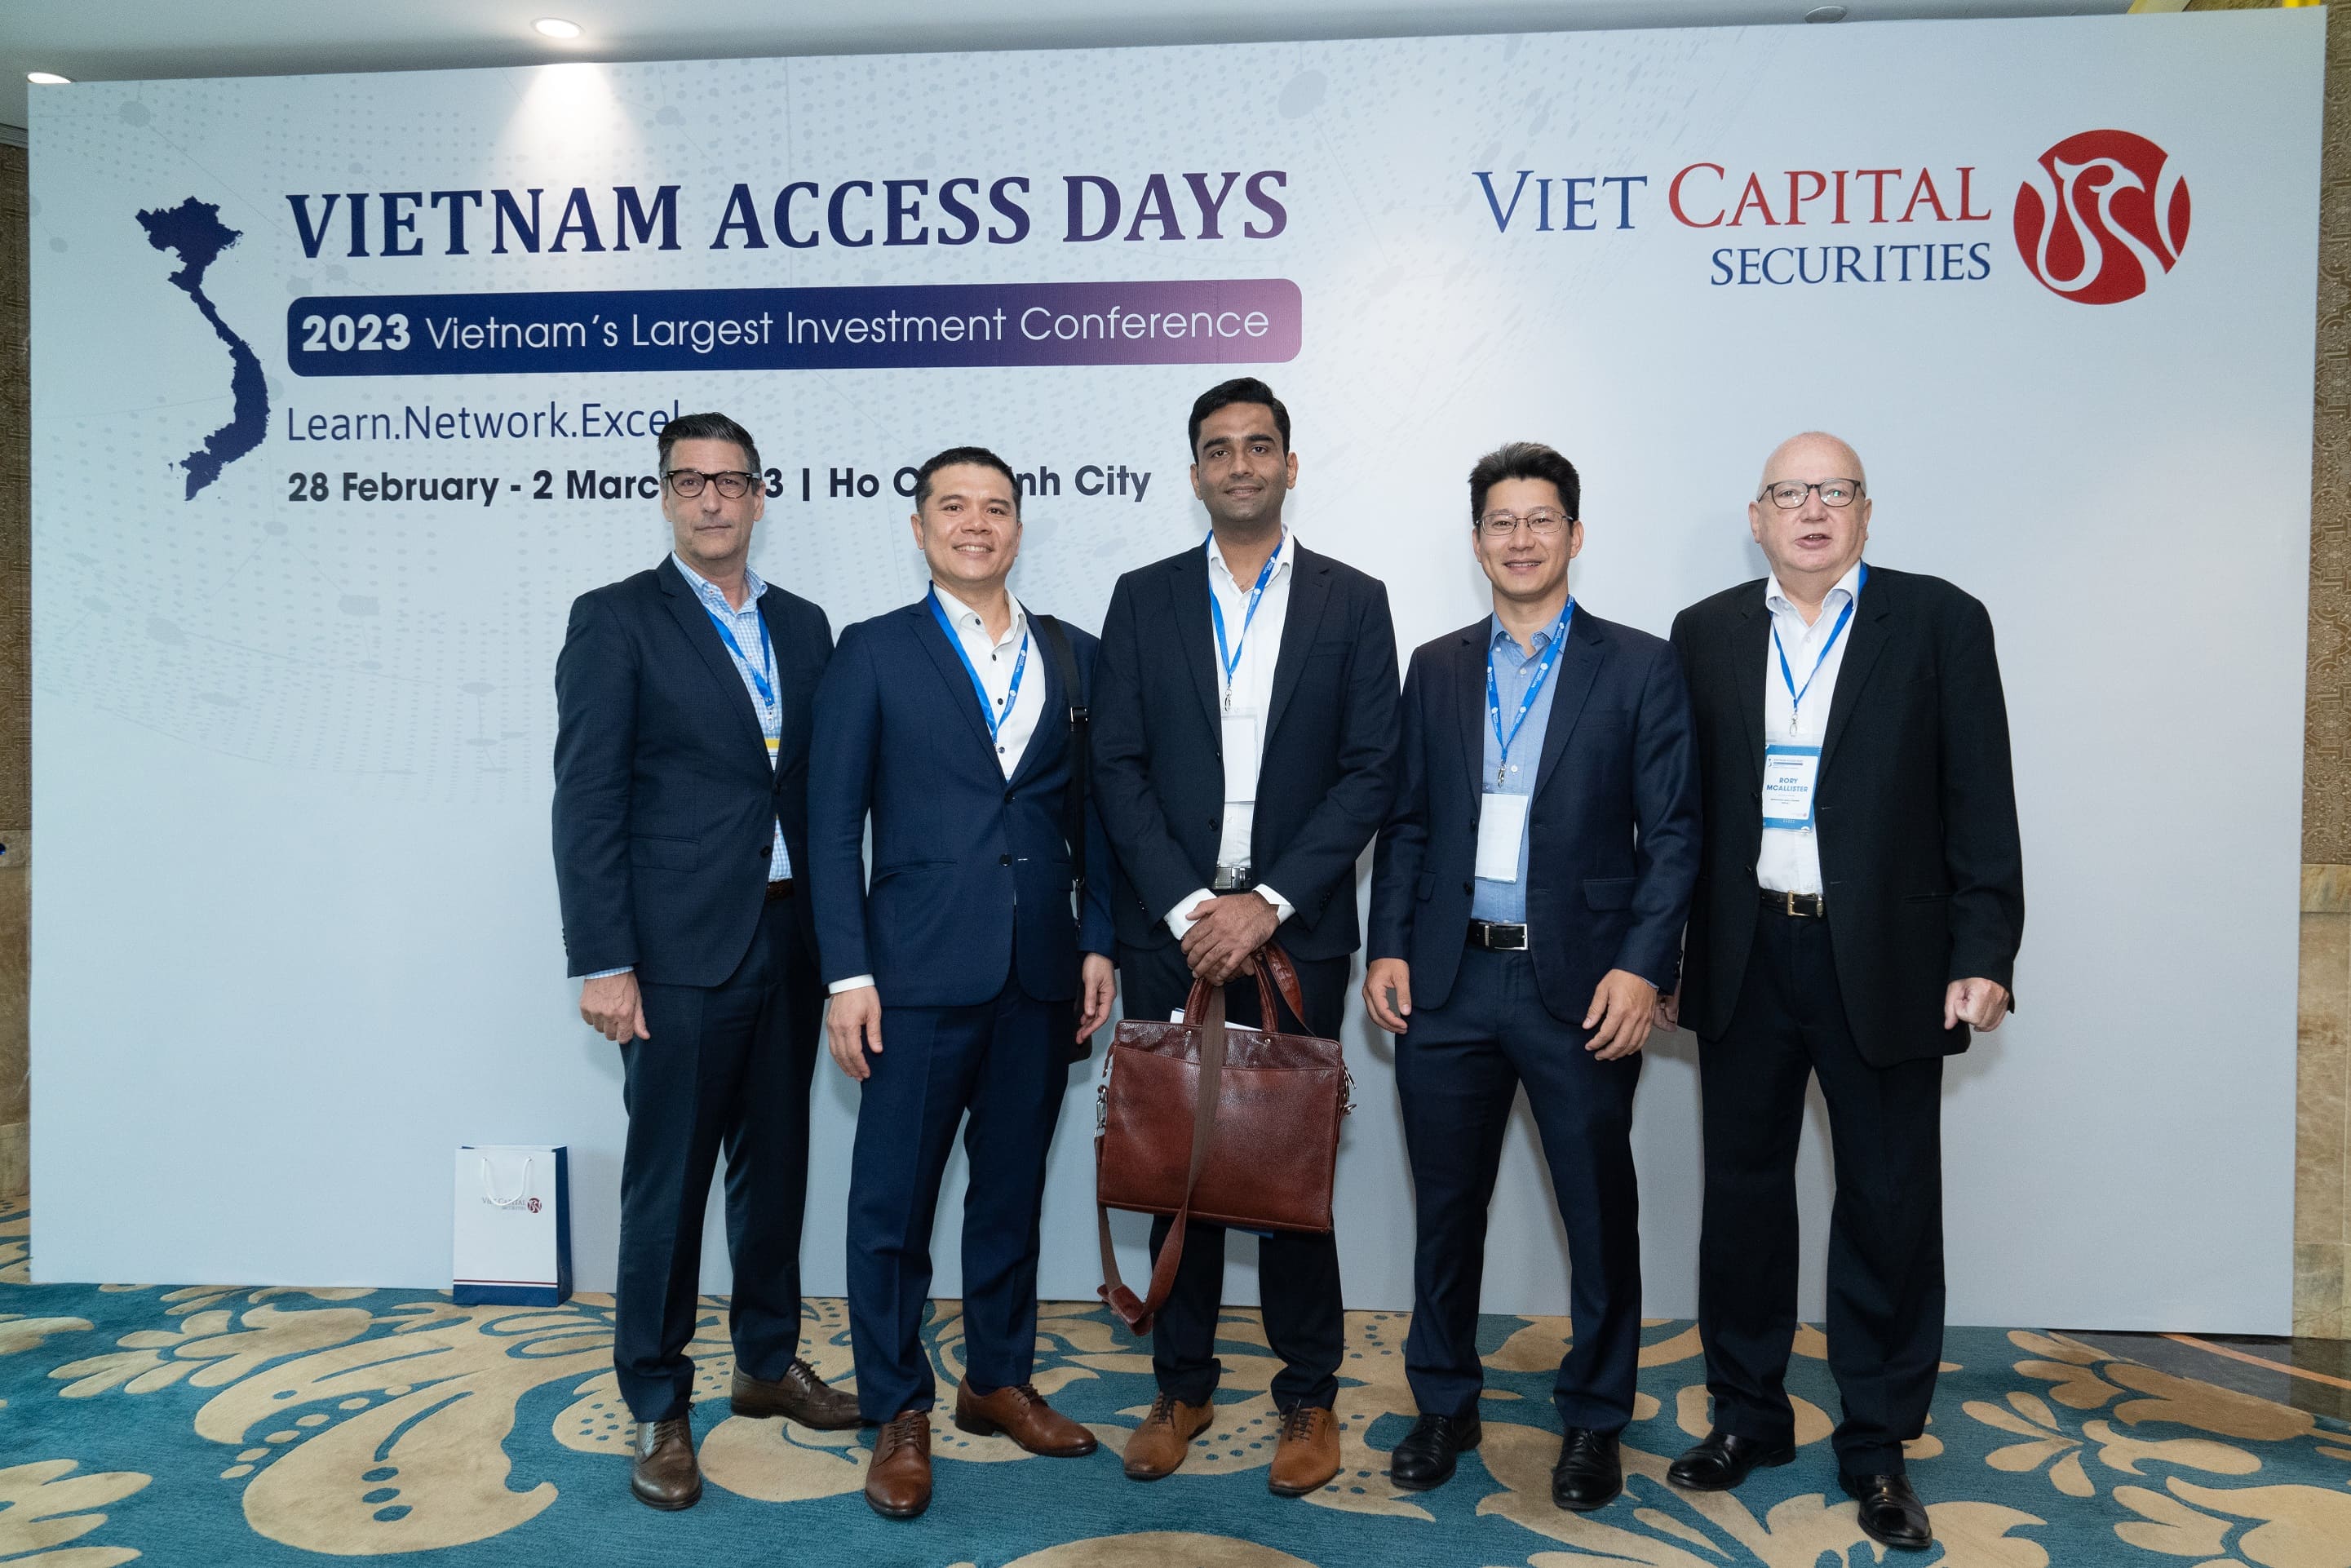 Vietnam Access Days